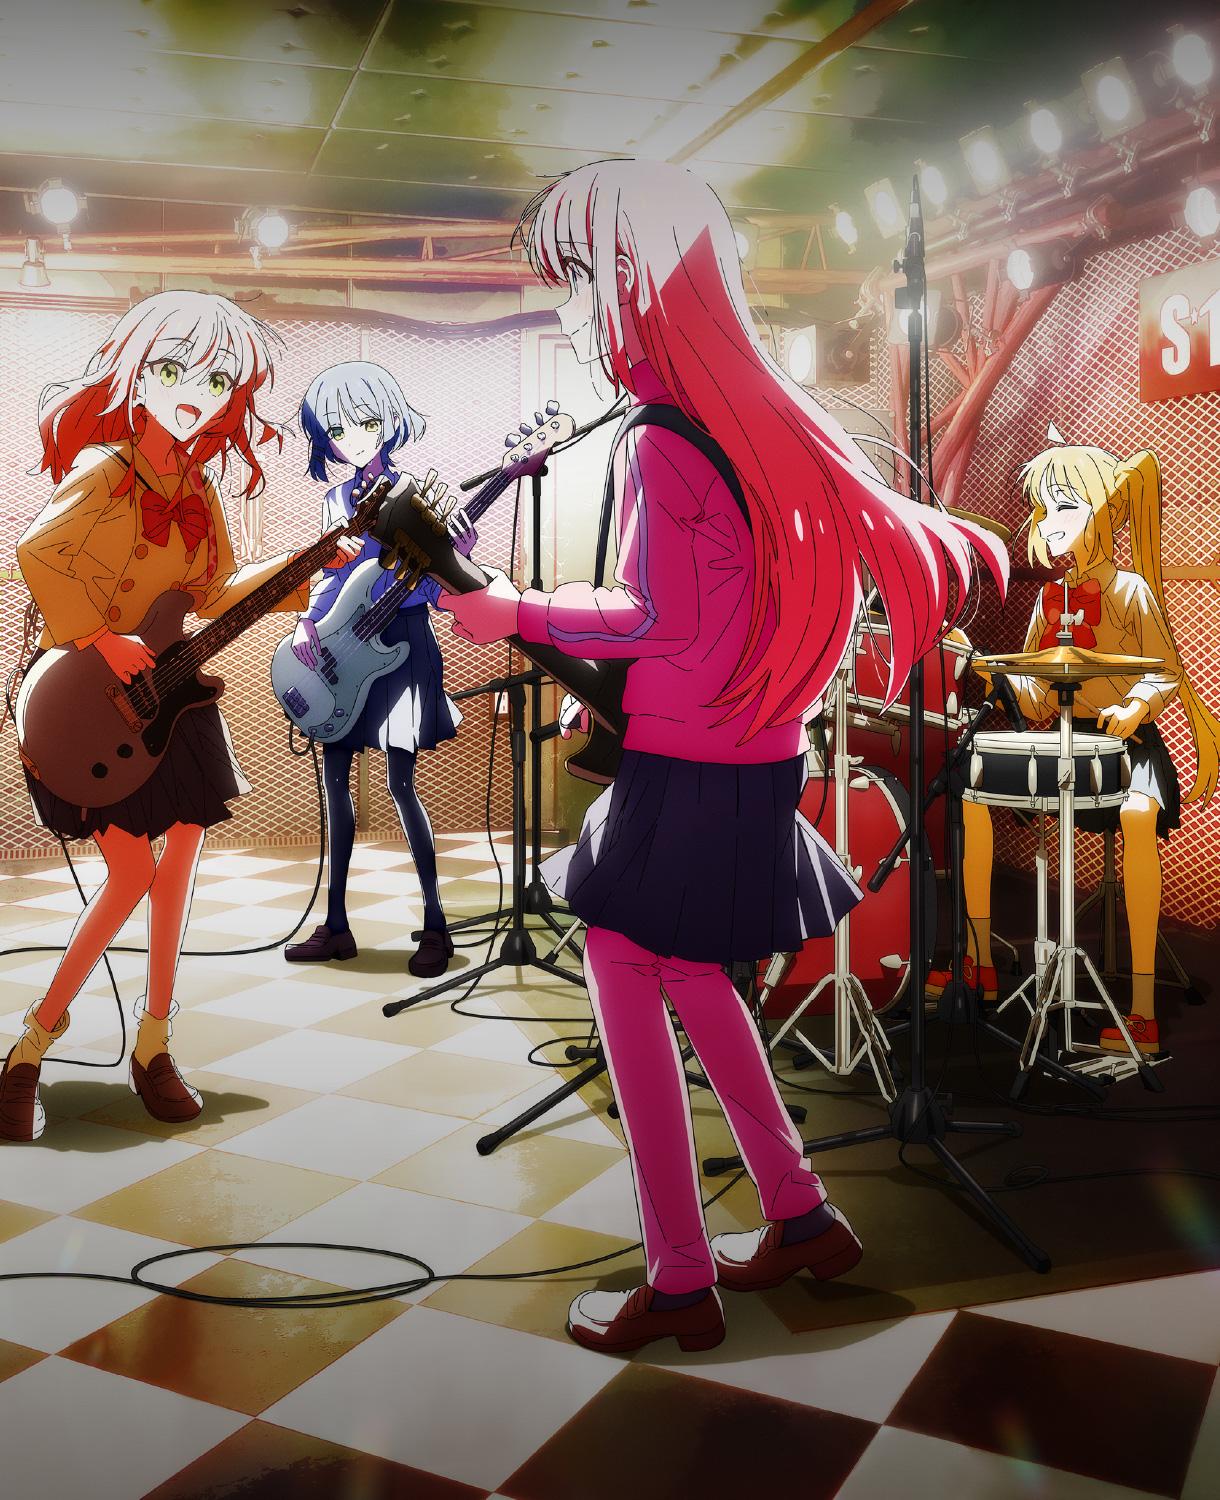 Wallpaper  BOCCHI THE ROCK bocchi anime girls vertical gotou hitori  guitar musical instrument 3050x3750  Re4s0n  2218874  HD Wallpapers   WallHere